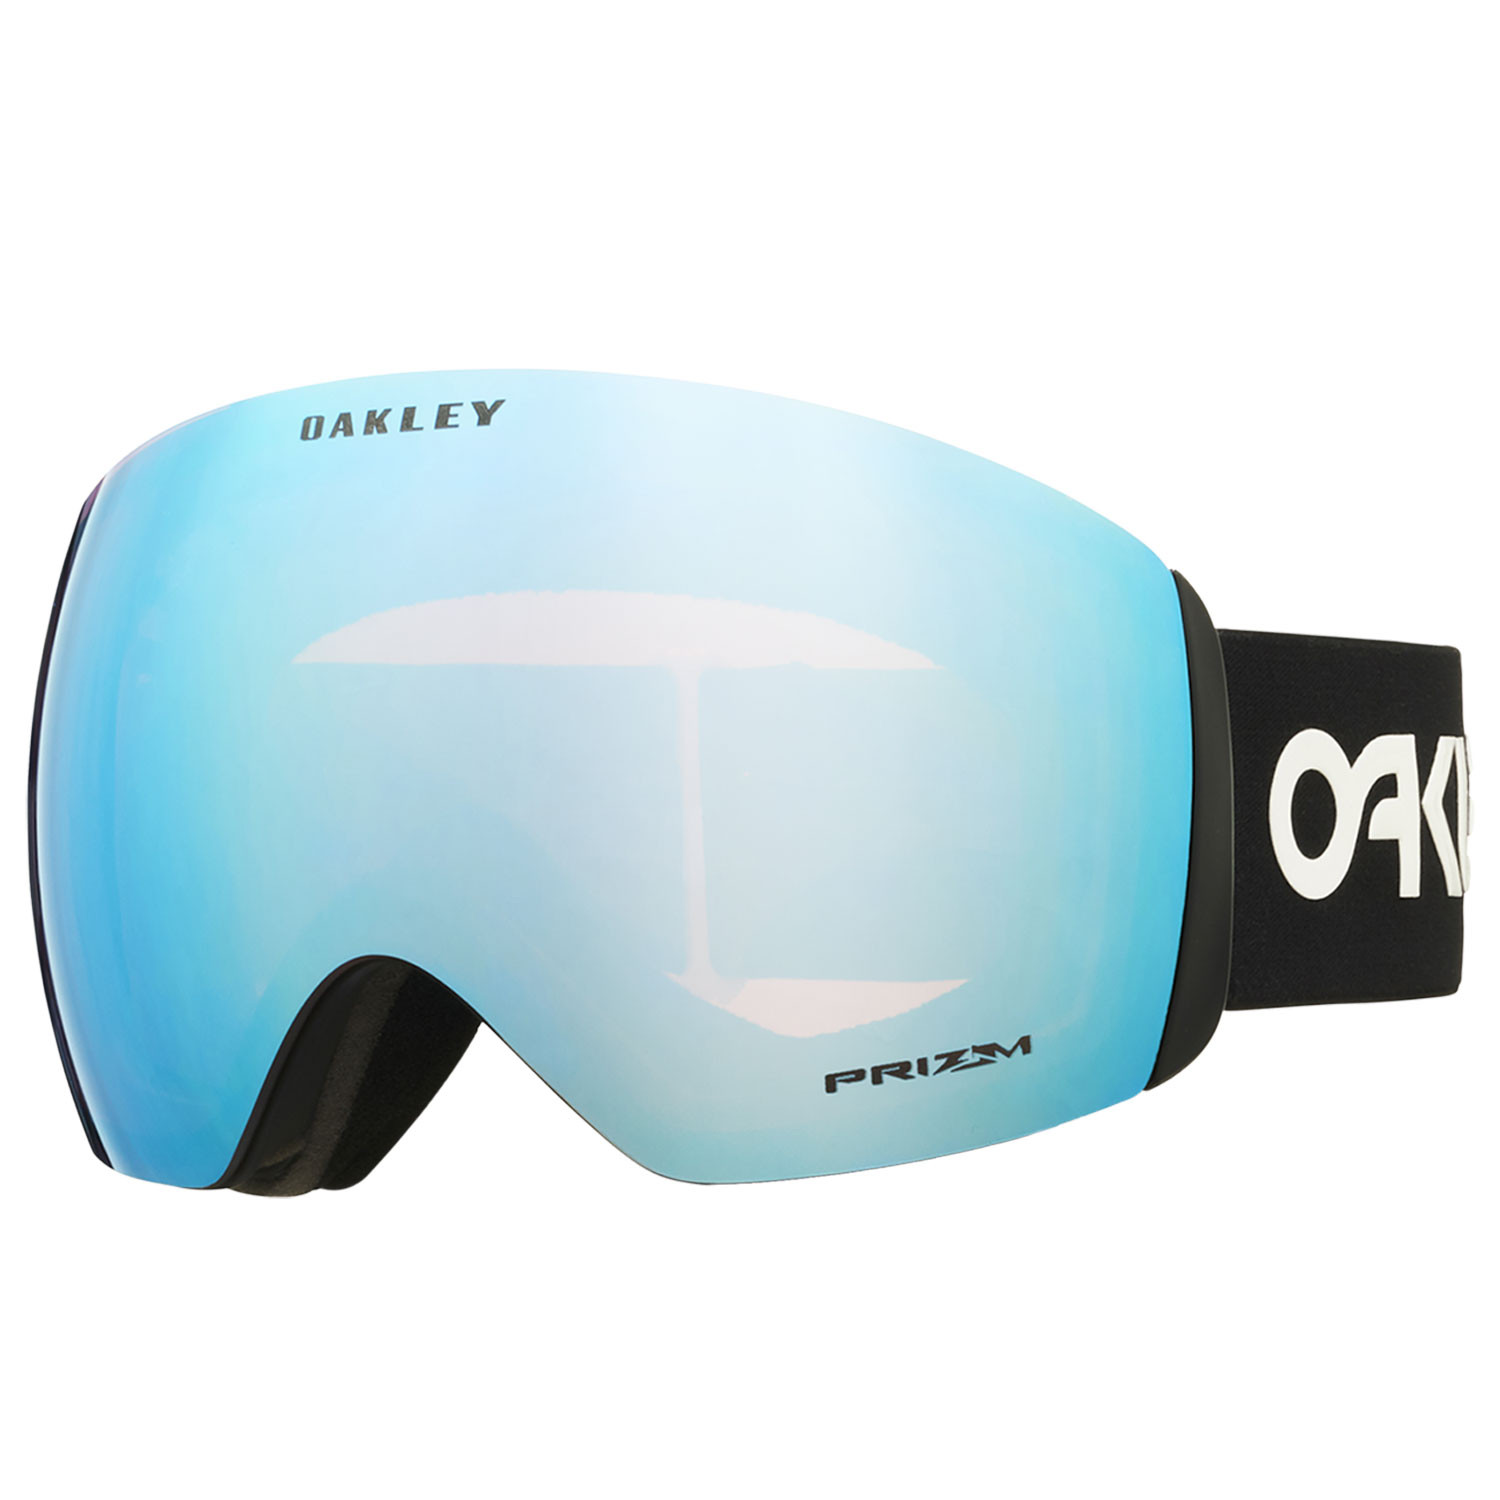 Oakley Flight Deck L Goggles w/ Iridium Lens | The Ski Monster